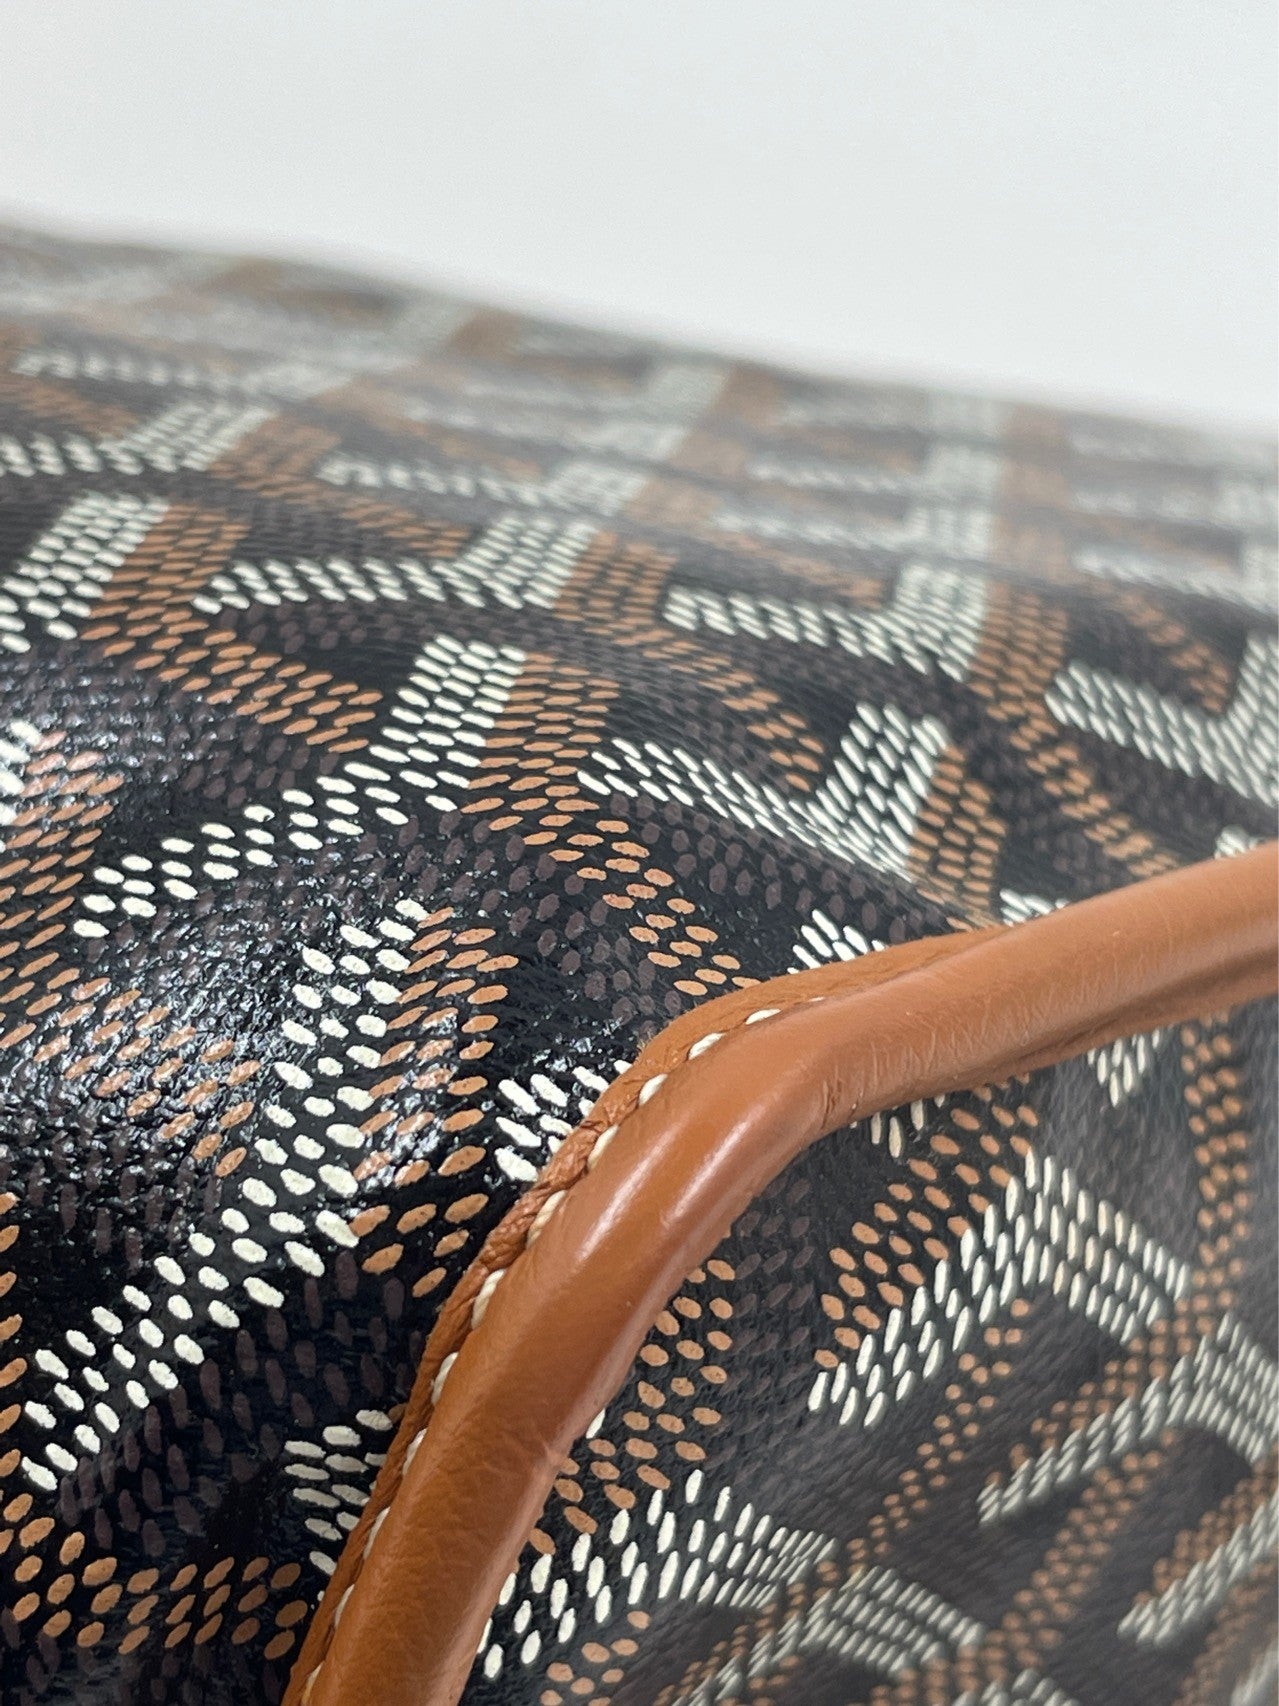 Anjou leather handbag Goyard Brown in Leather - 32090926